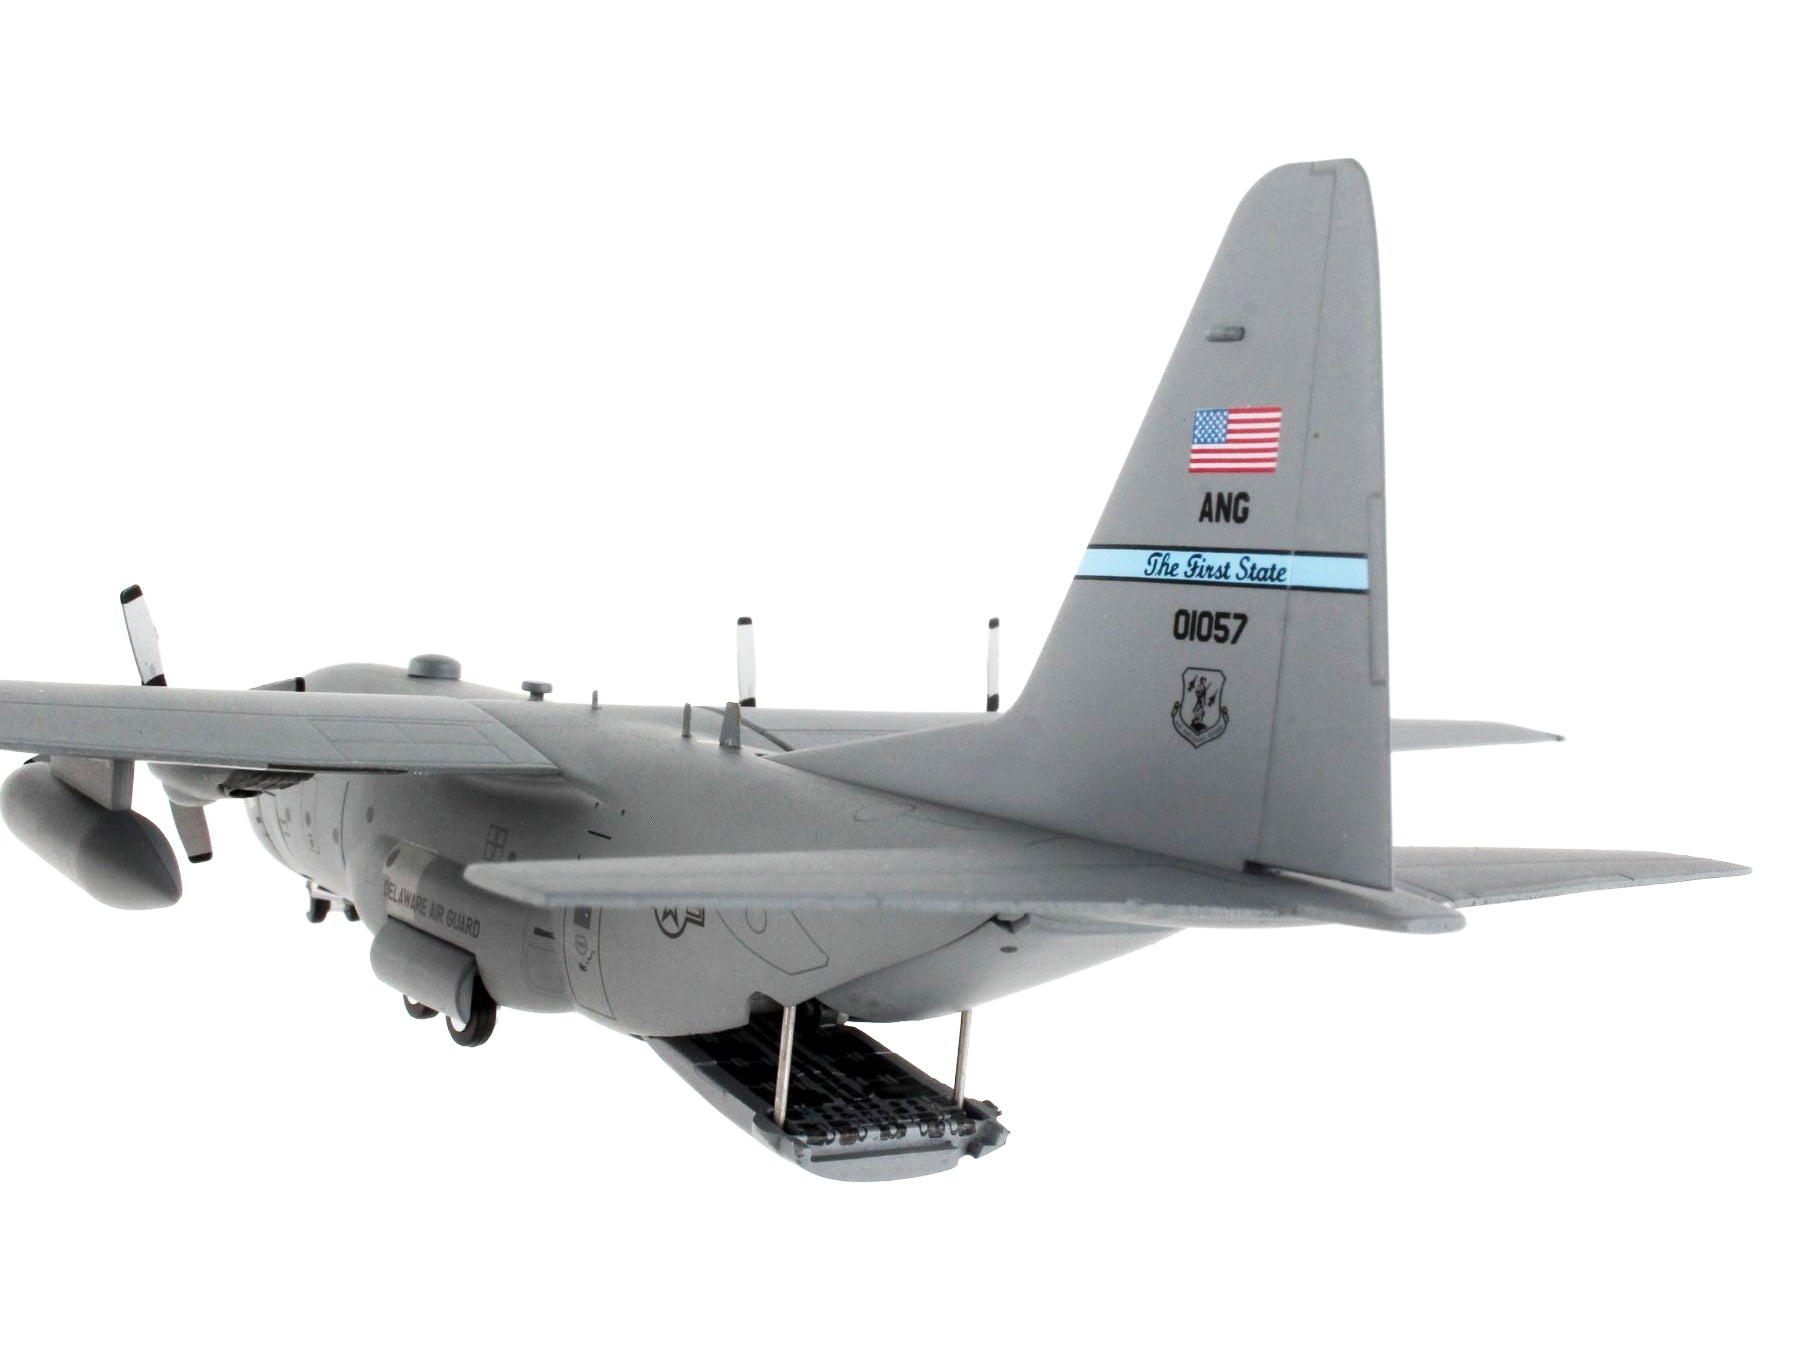 Lockheed C-130H Hercules Transport Aircraft "Delaware Air National Guard" United States Air Force